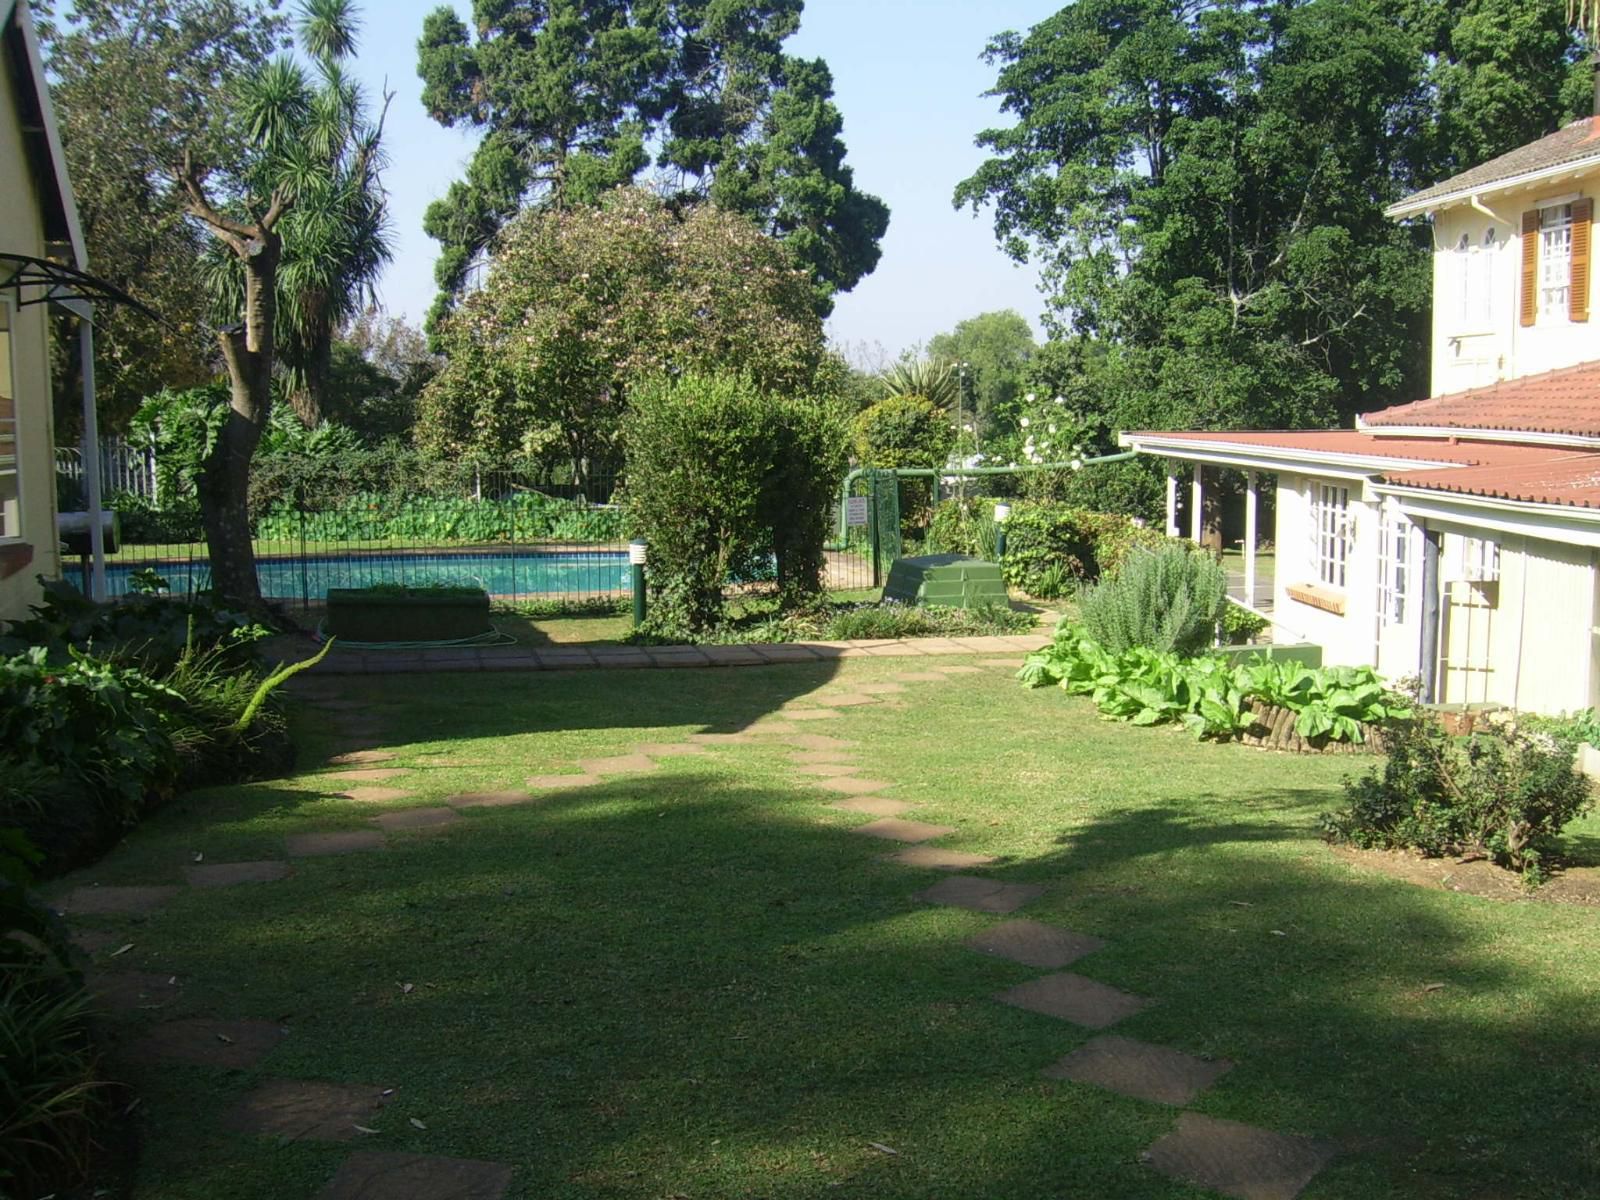 Nutmeg Bandb Howick Kwazulu Natal South Africa House, Building, Architecture, Palm Tree, Plant, Nature, Wood, Garden